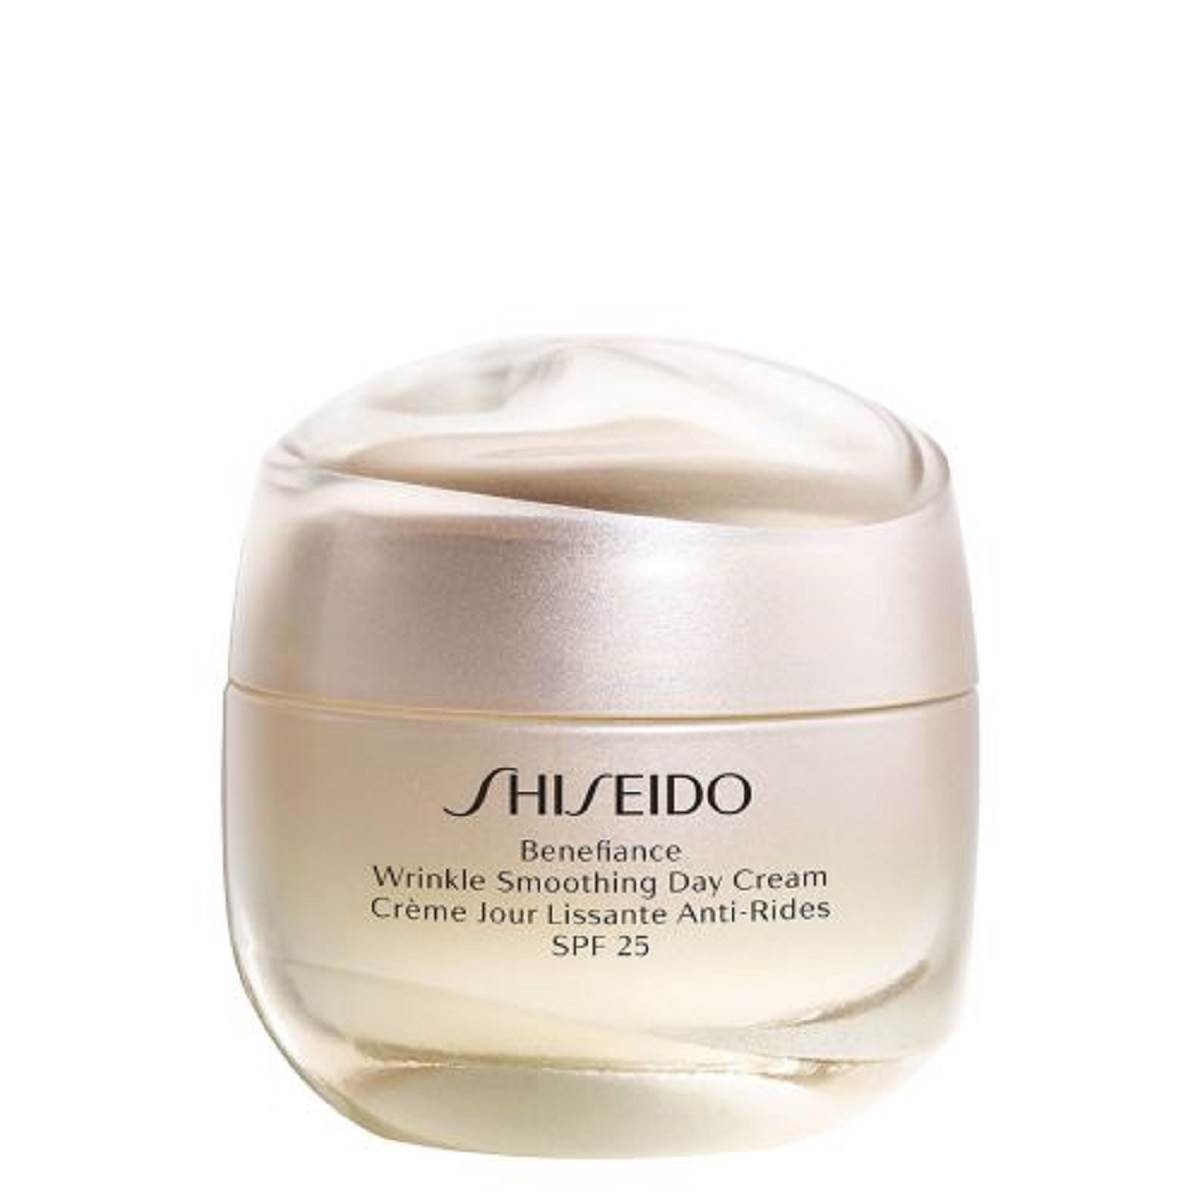  Shiseido krema za lice. 